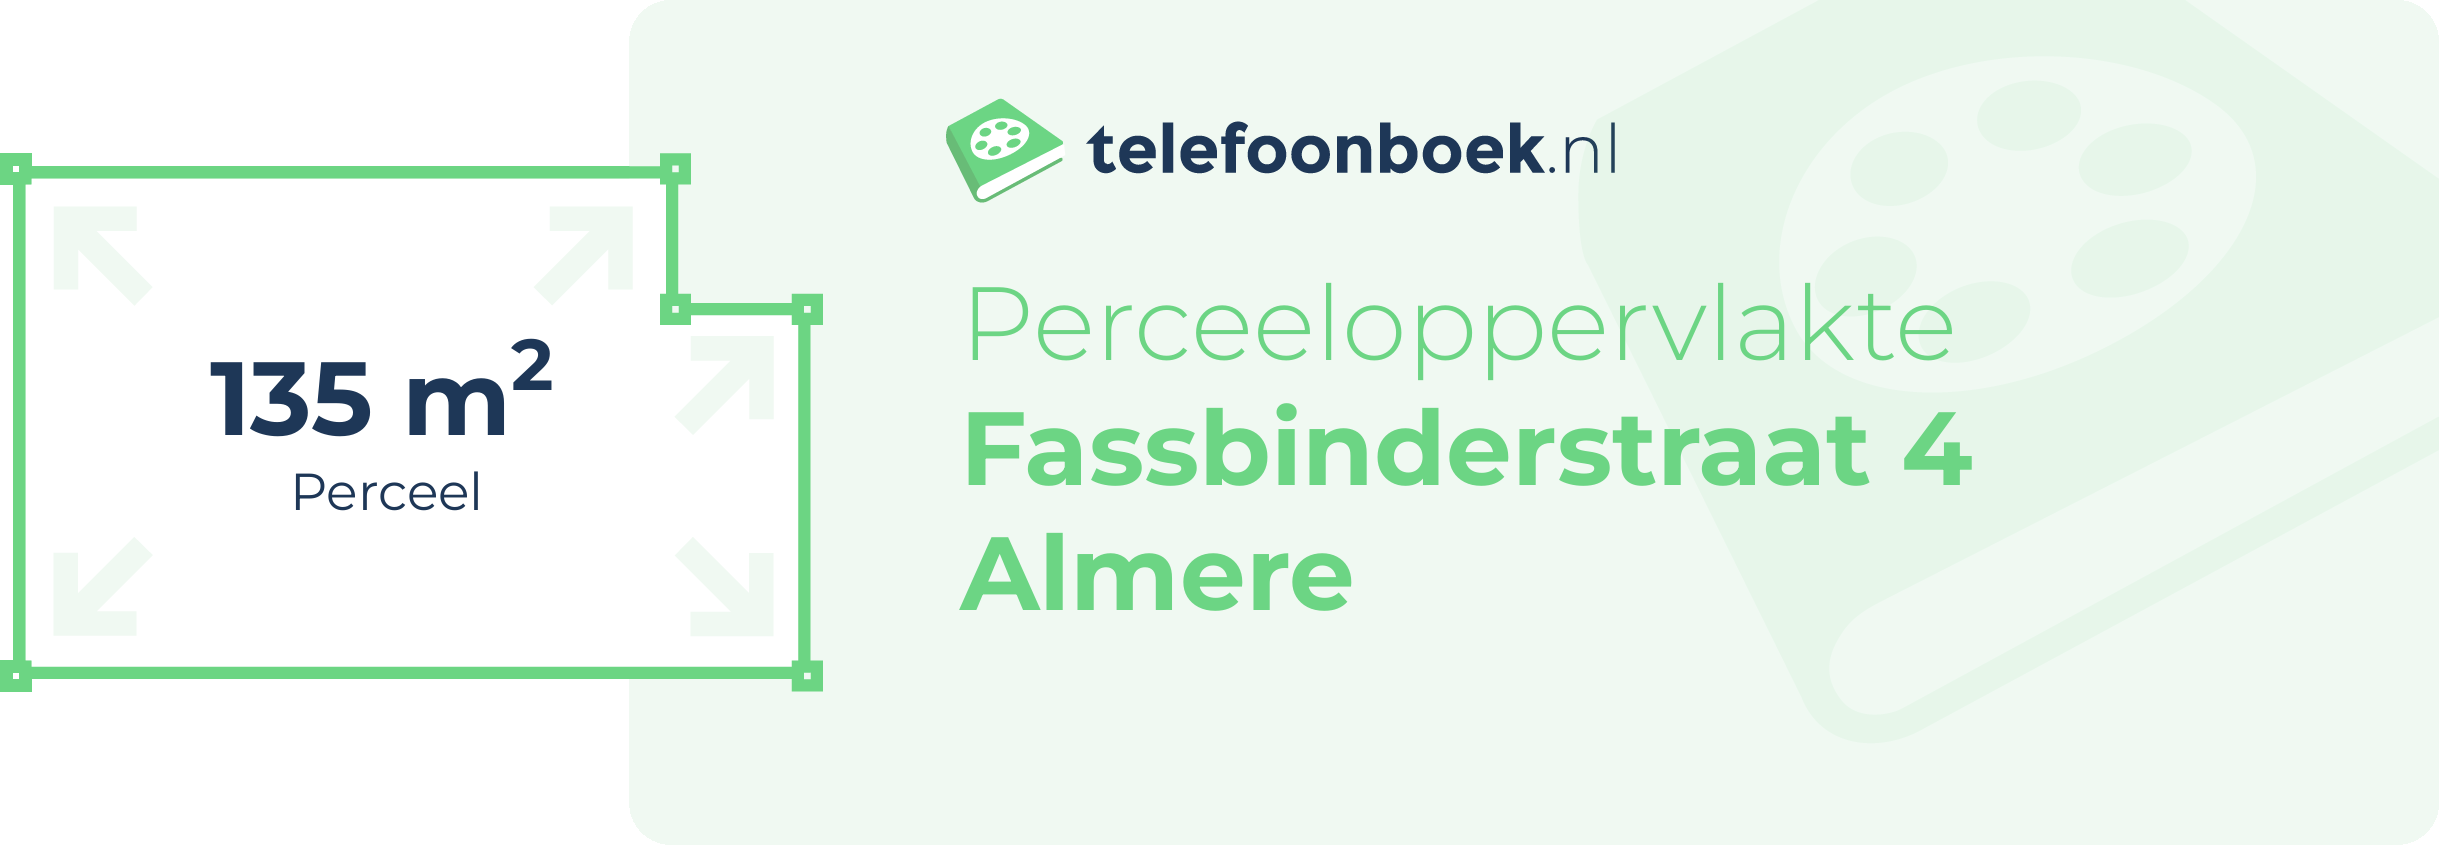 Perceeloppervlakte Fassbinderstraat 4 Almere